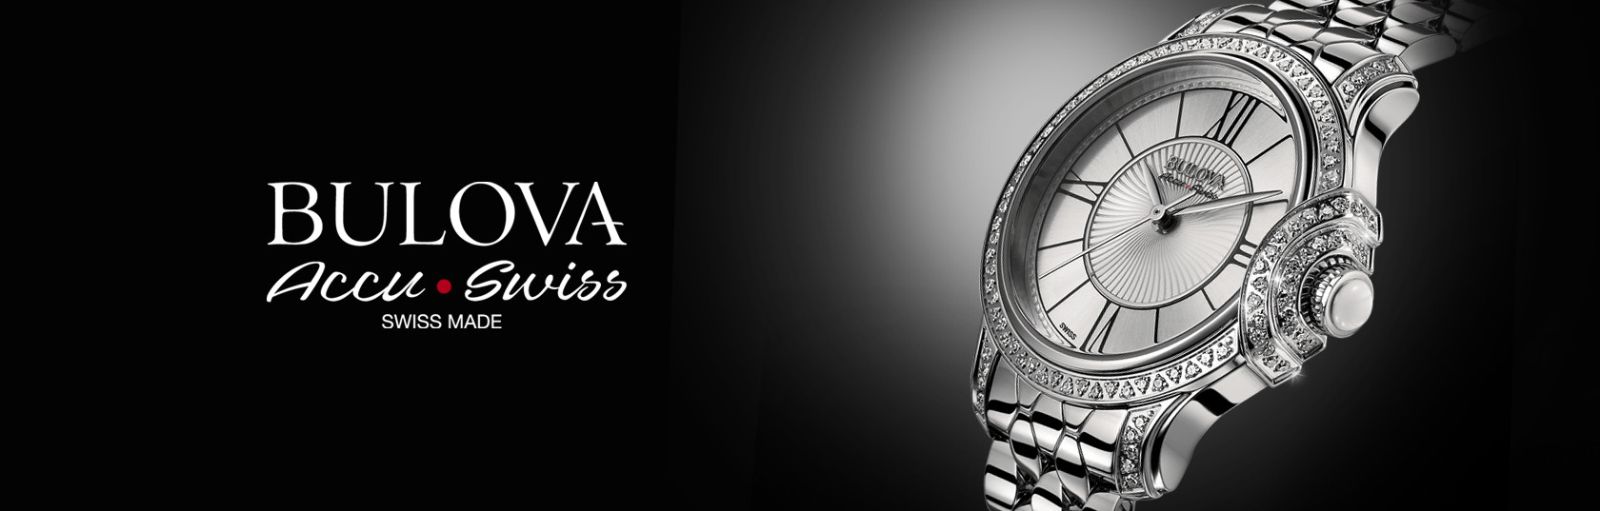 Đồng hồ Bulova Accuswiss